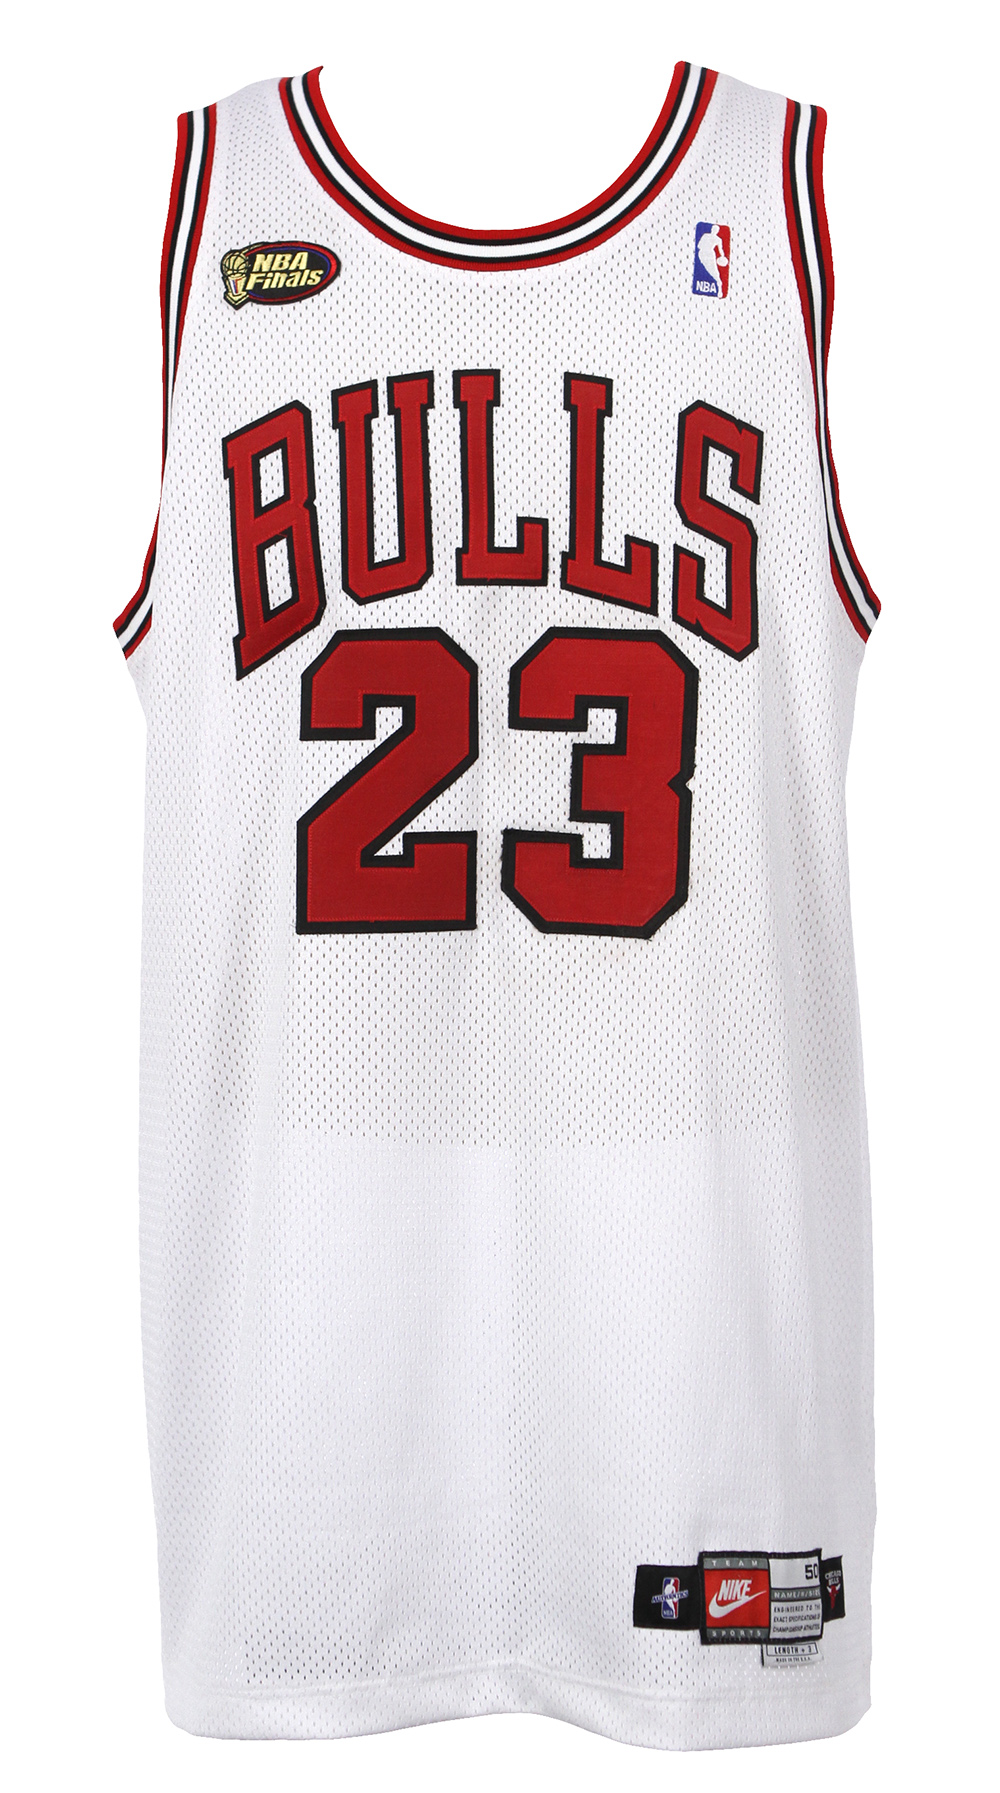 Michael Jordan Game-Used Bulls Jersey (MEARS LOA) (See Description)